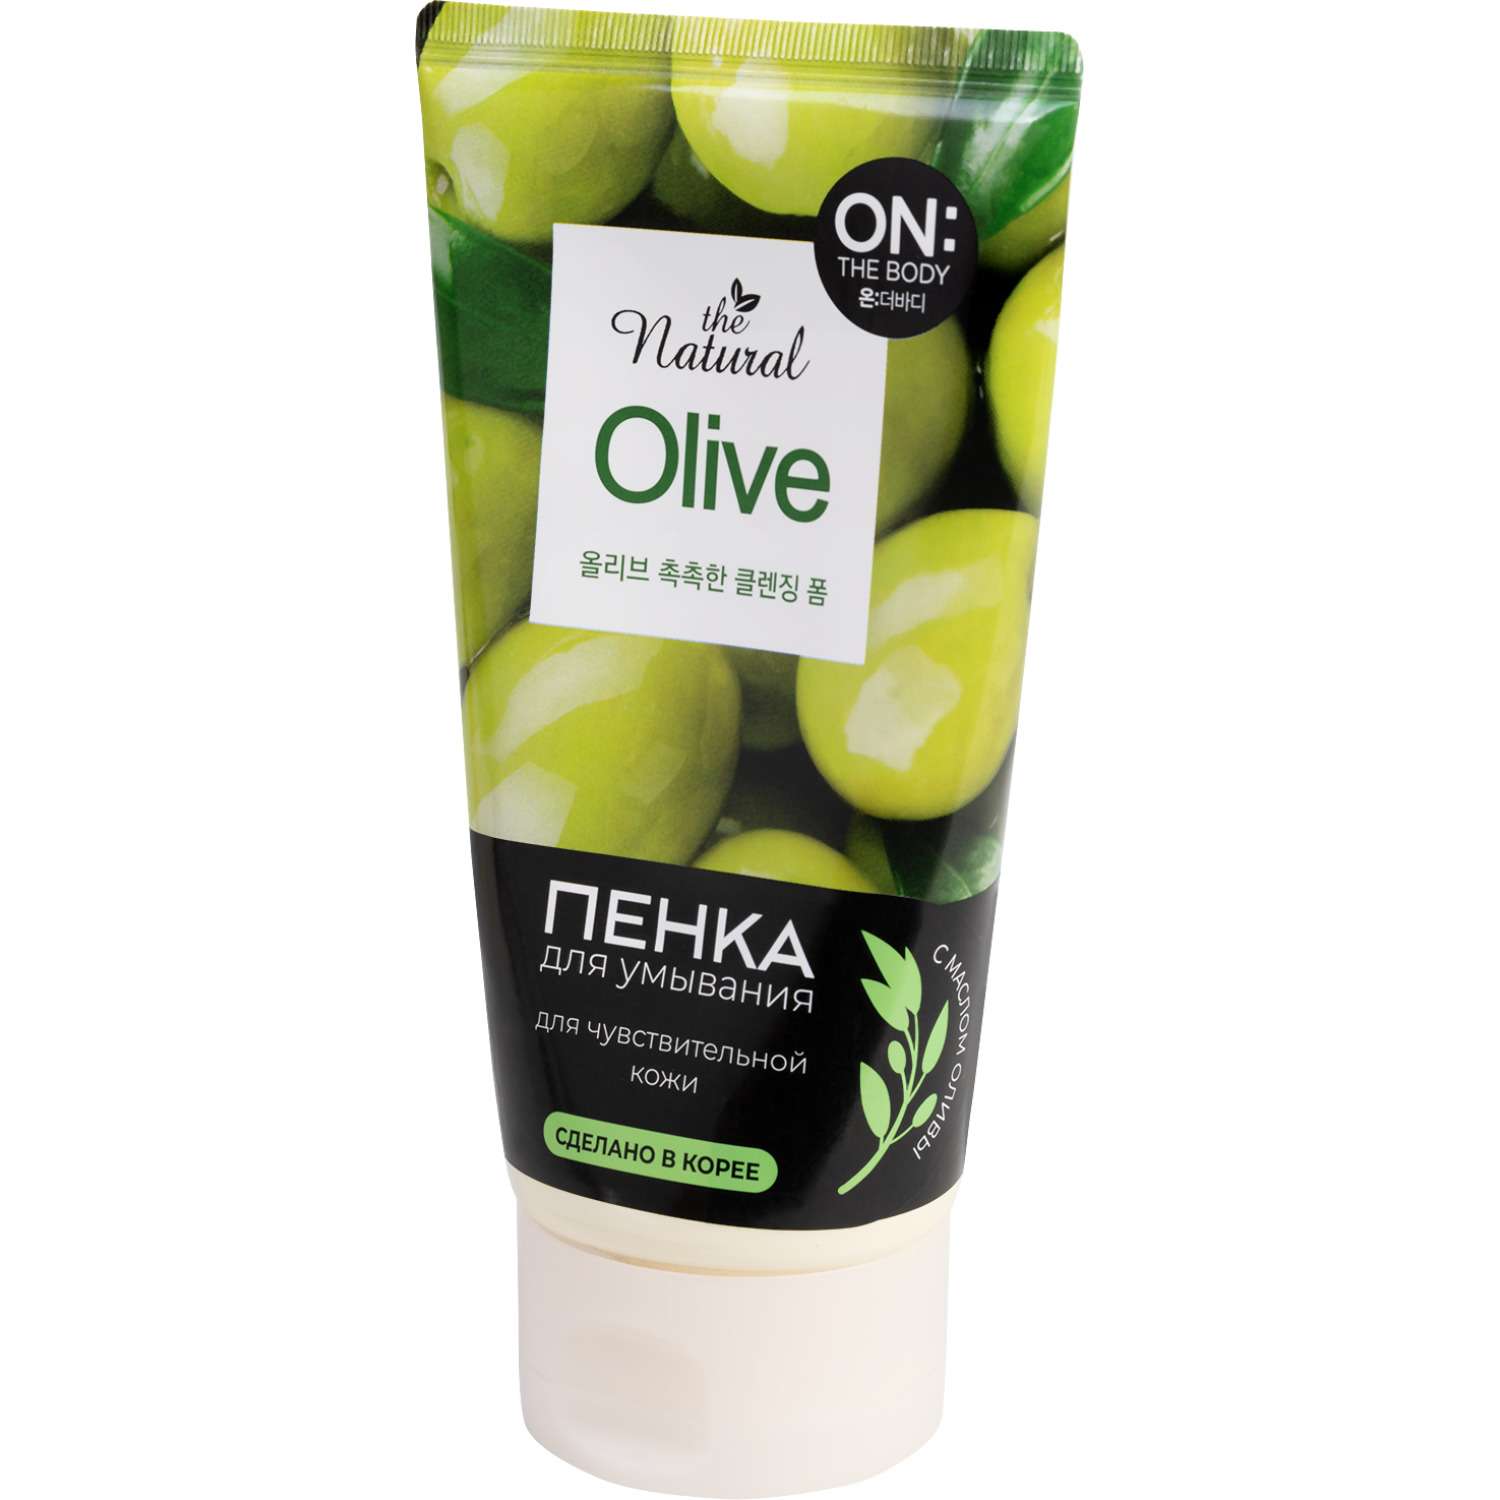 Пенка ON THE BODY LG для умывания natural olive с маслом оливы 120 гр - фото 8